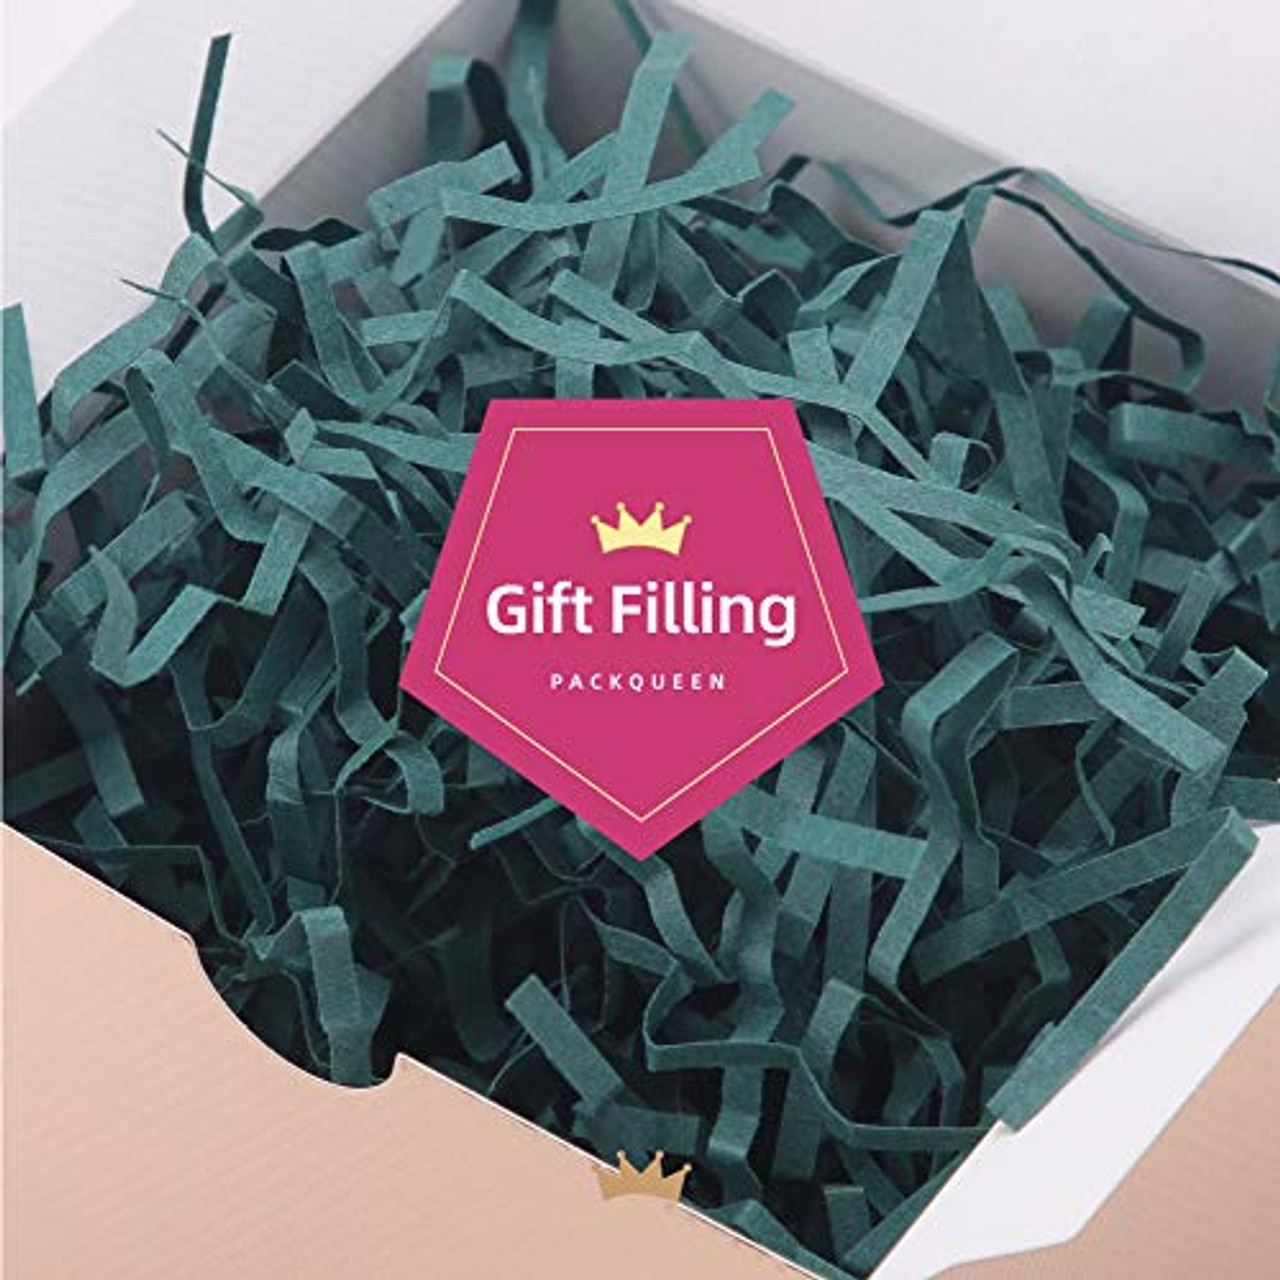 How To Make Shredded Paper For Gift Baskets